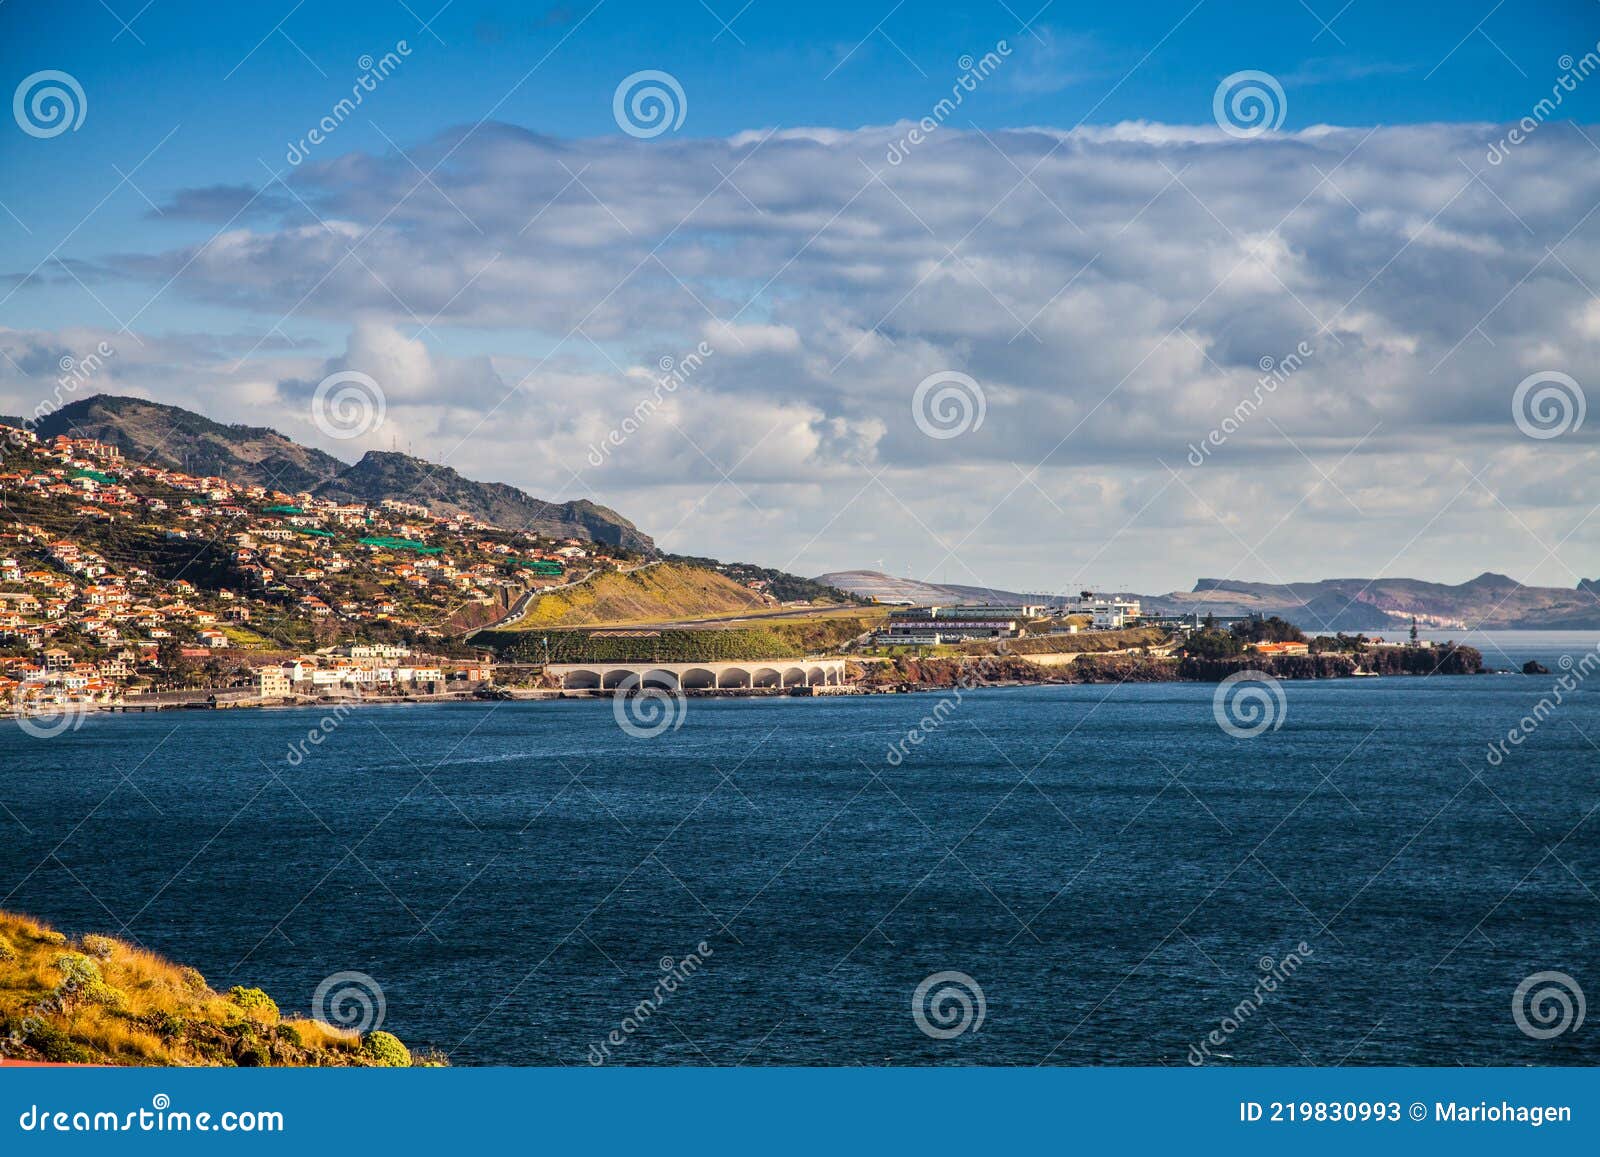 landscape around the famous and dangerous `cristiano ronaldo international airport`, as well the coastline of civil parish santa c